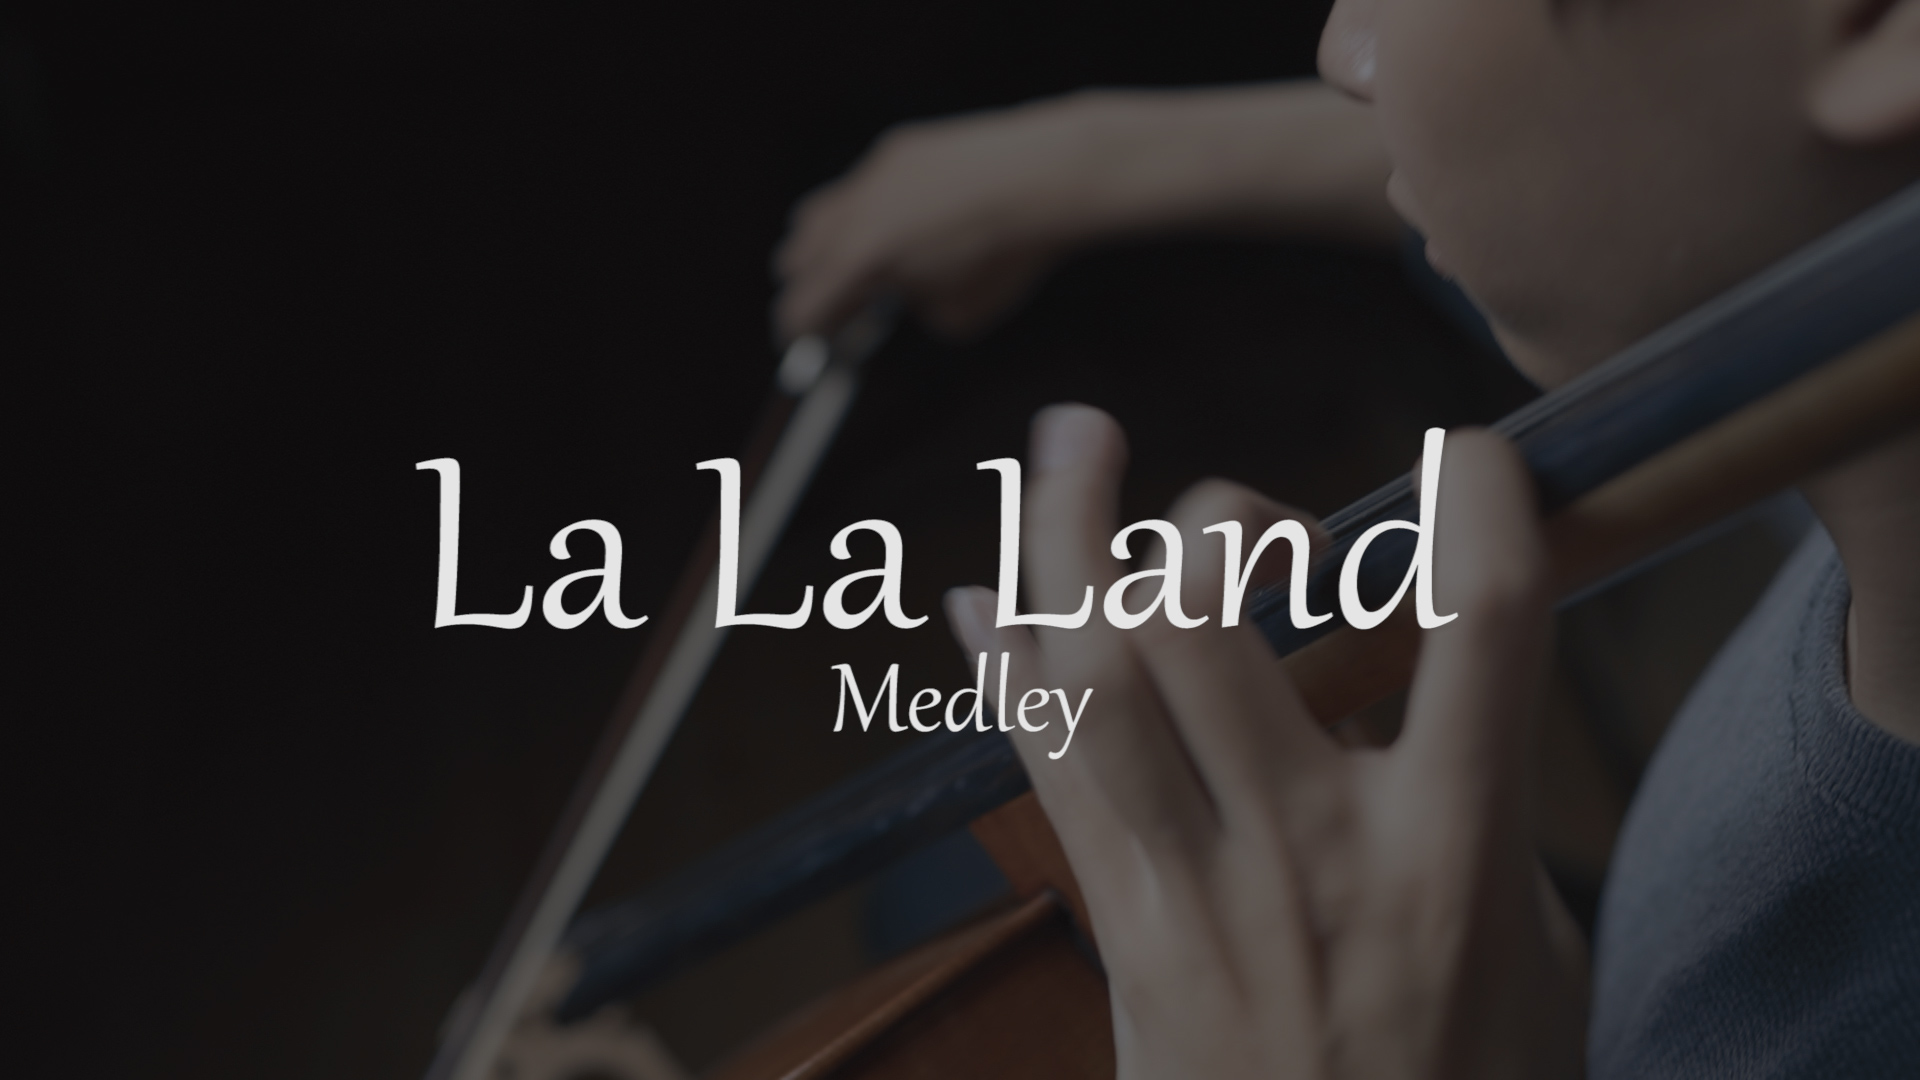 Suite of La La Land   《樂來越愛你》電影組曲 cello cover 大提琴演奏 『cover by YoYo Cello』